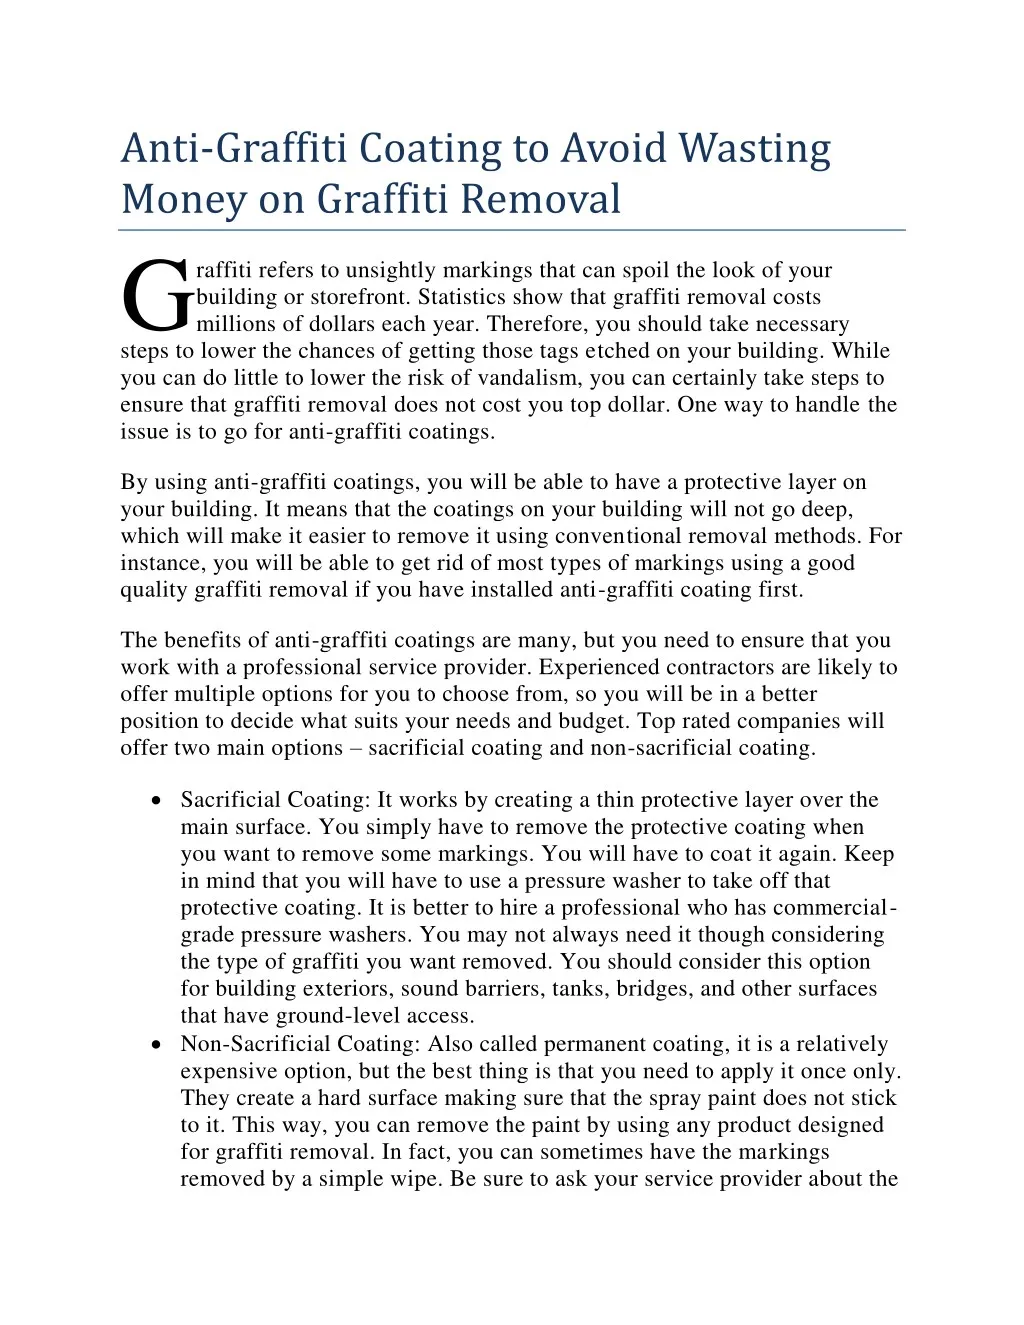 anti graffiti coating to avoid wasting money